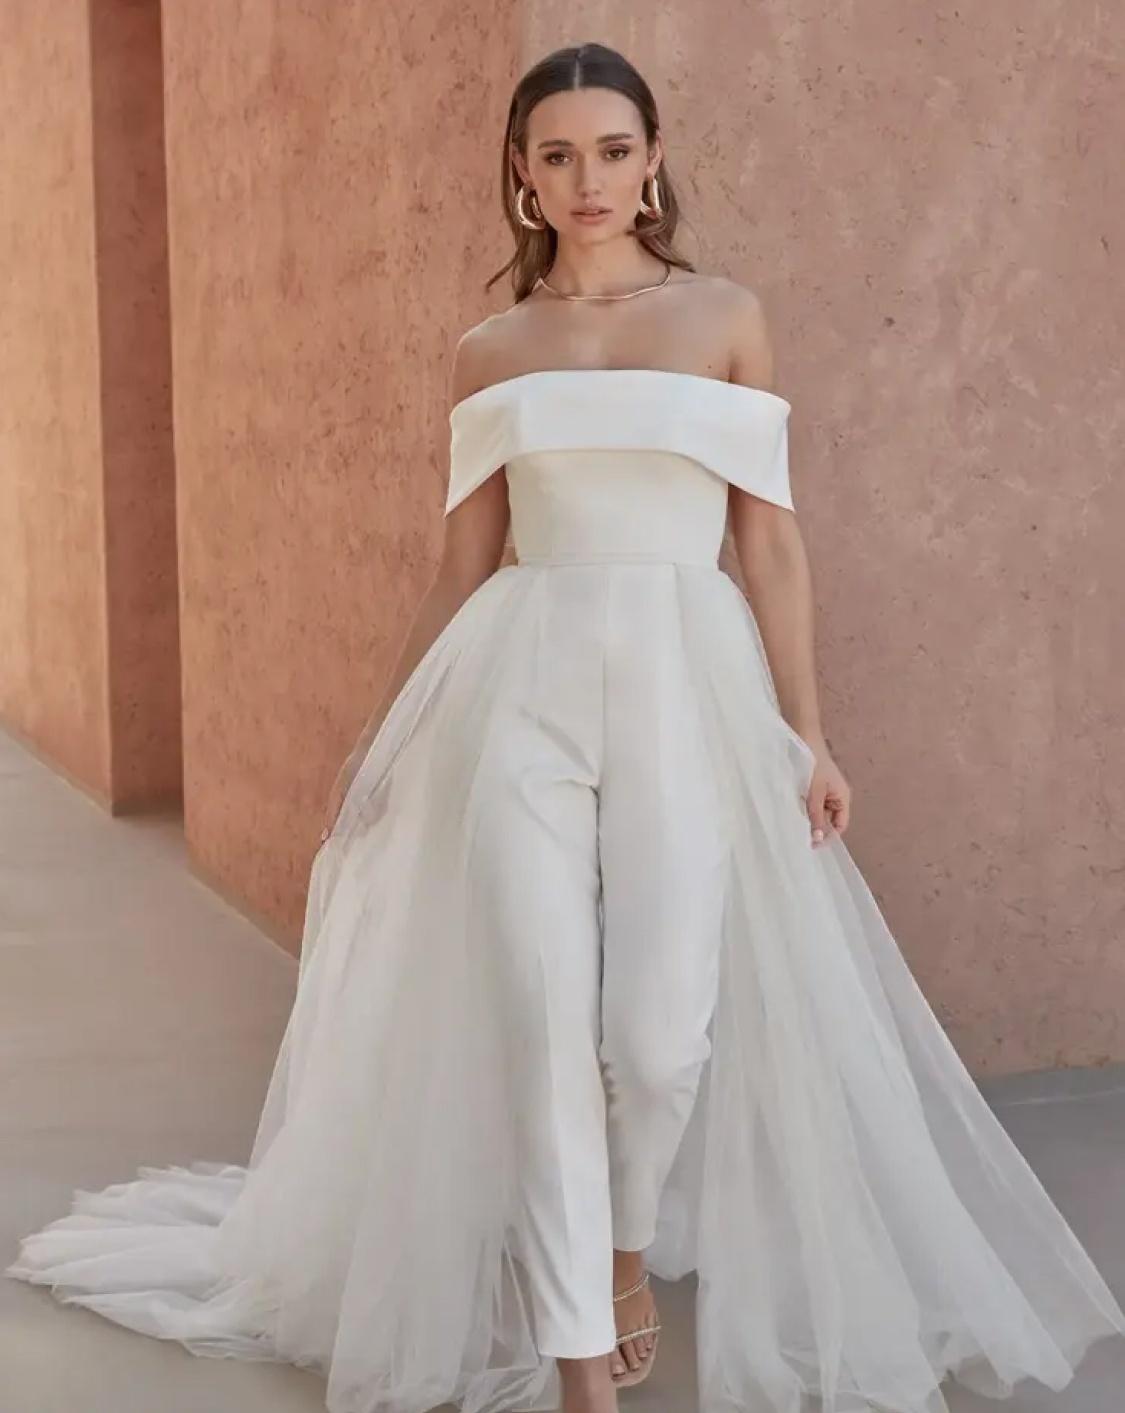 Model wearing white Adore dress